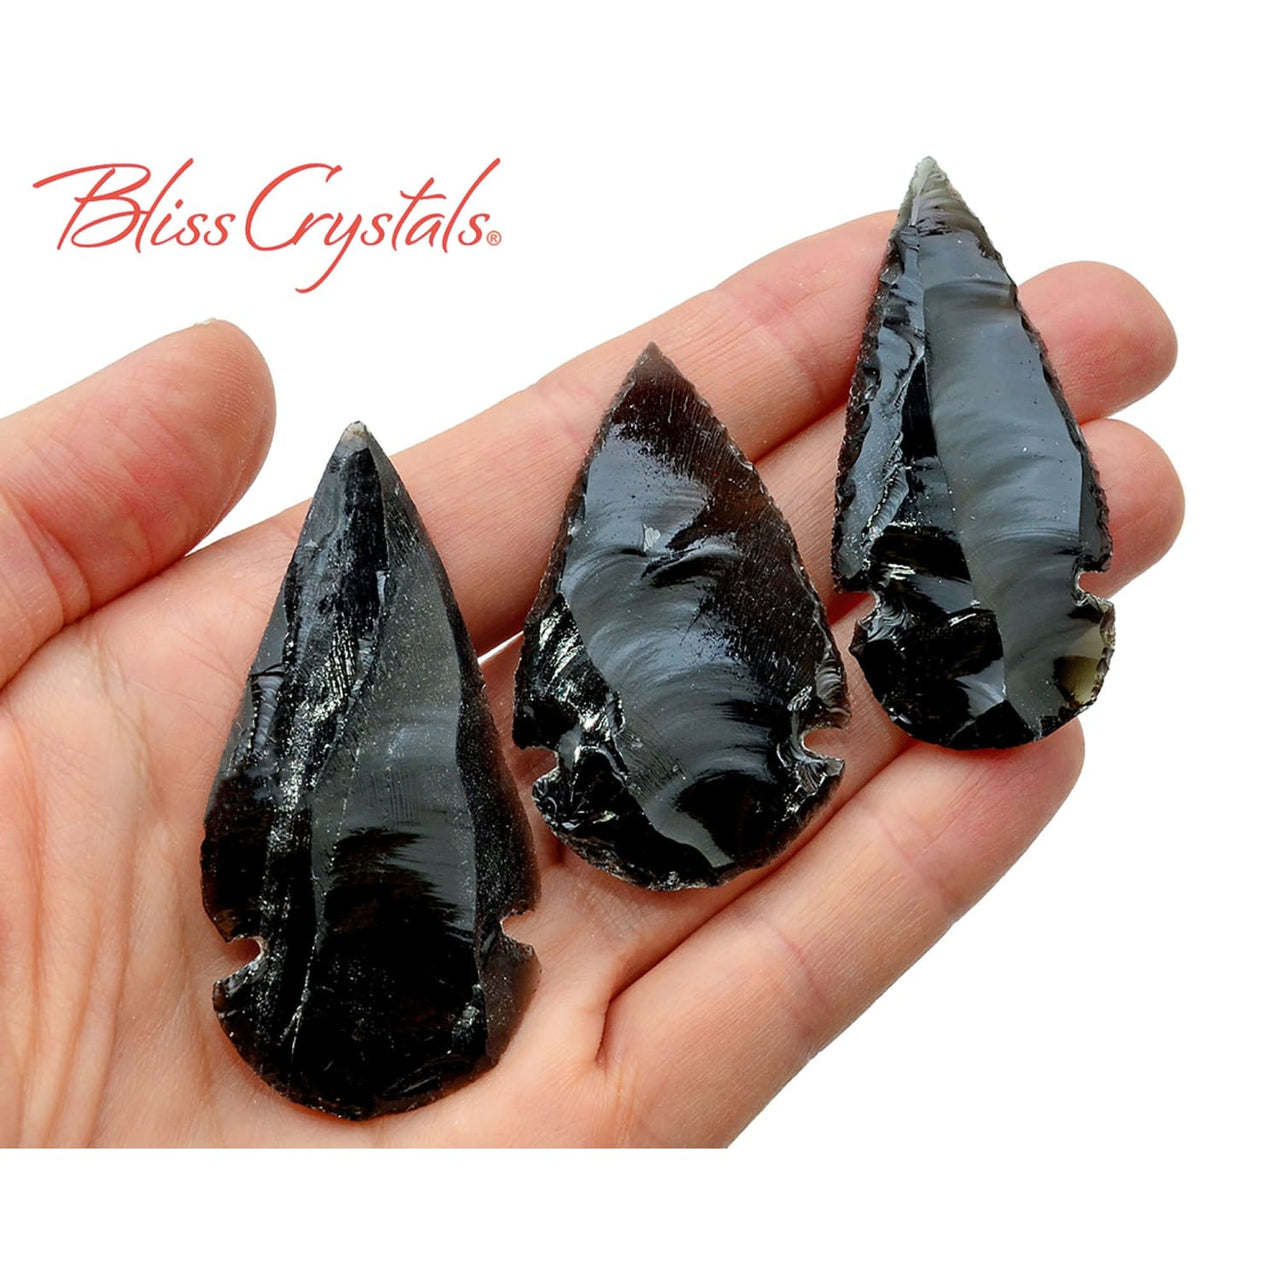 2 Black Obsidian Natural Arrowheads for Grounding #BA14